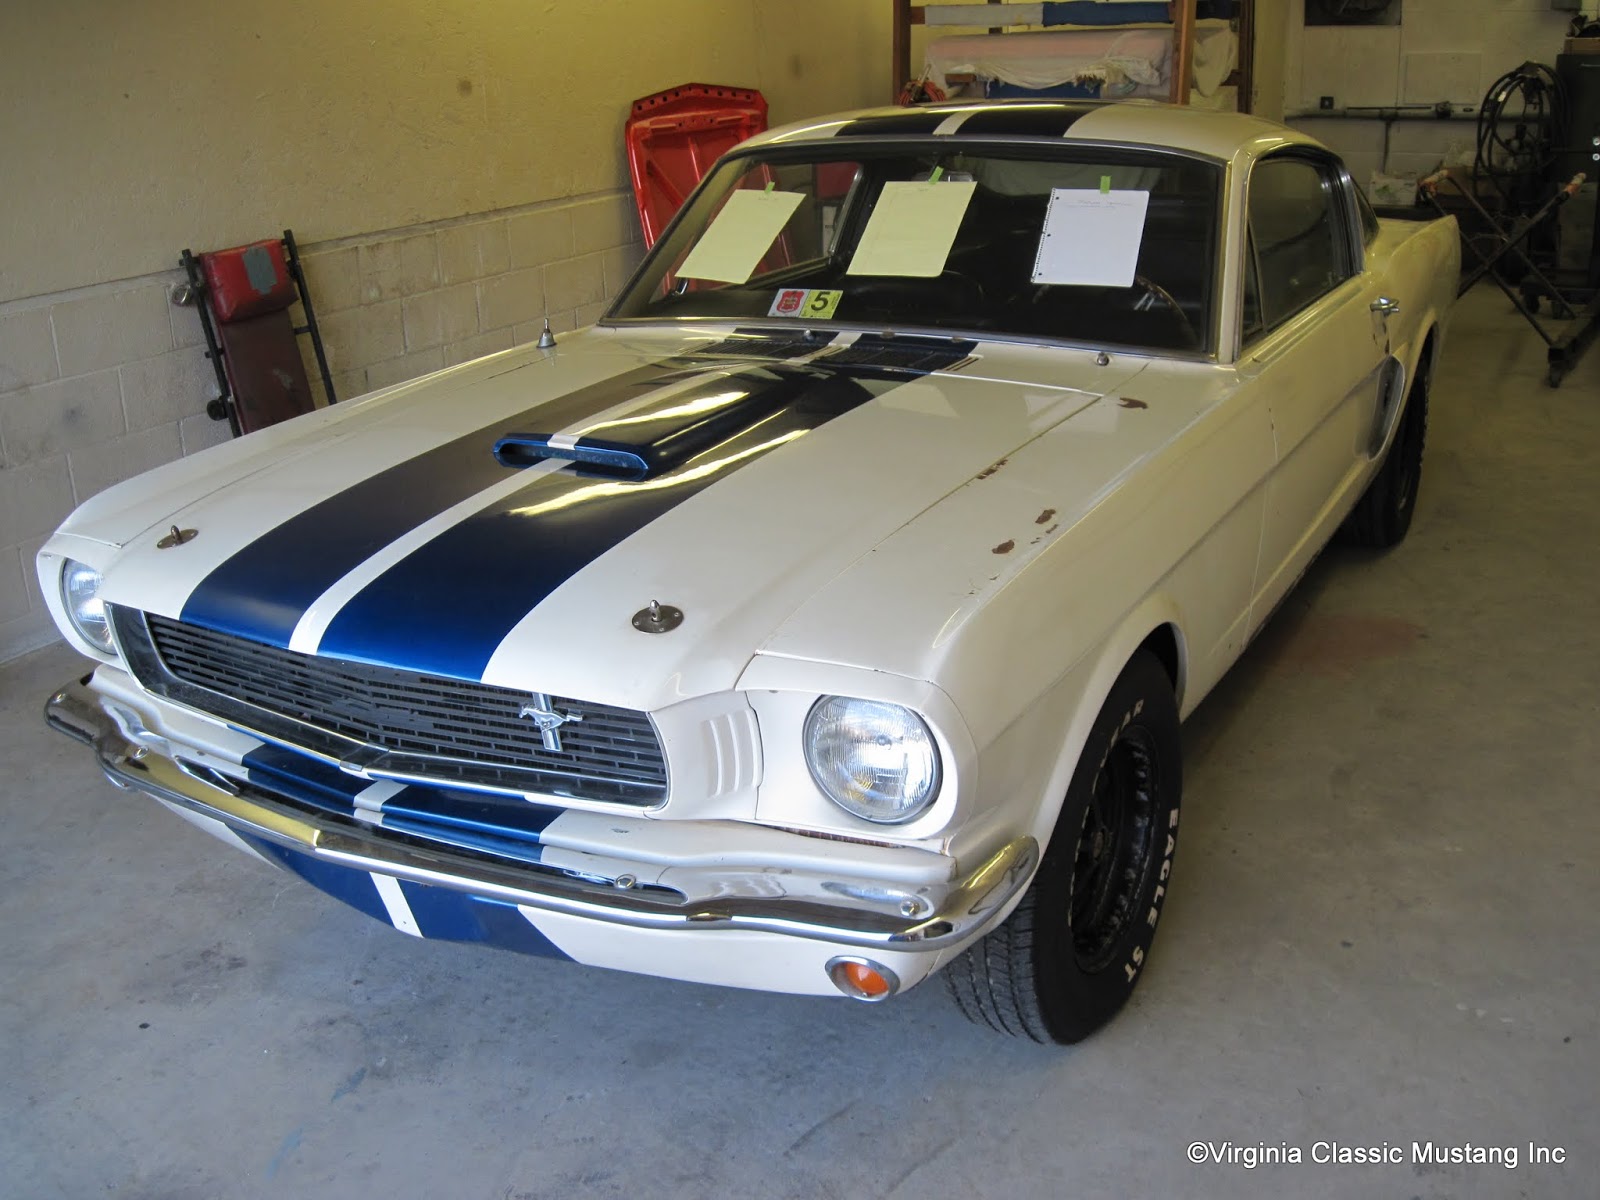 Virginia Classic Mustang Blog: 1966 GT350 Mustang Restoration Project